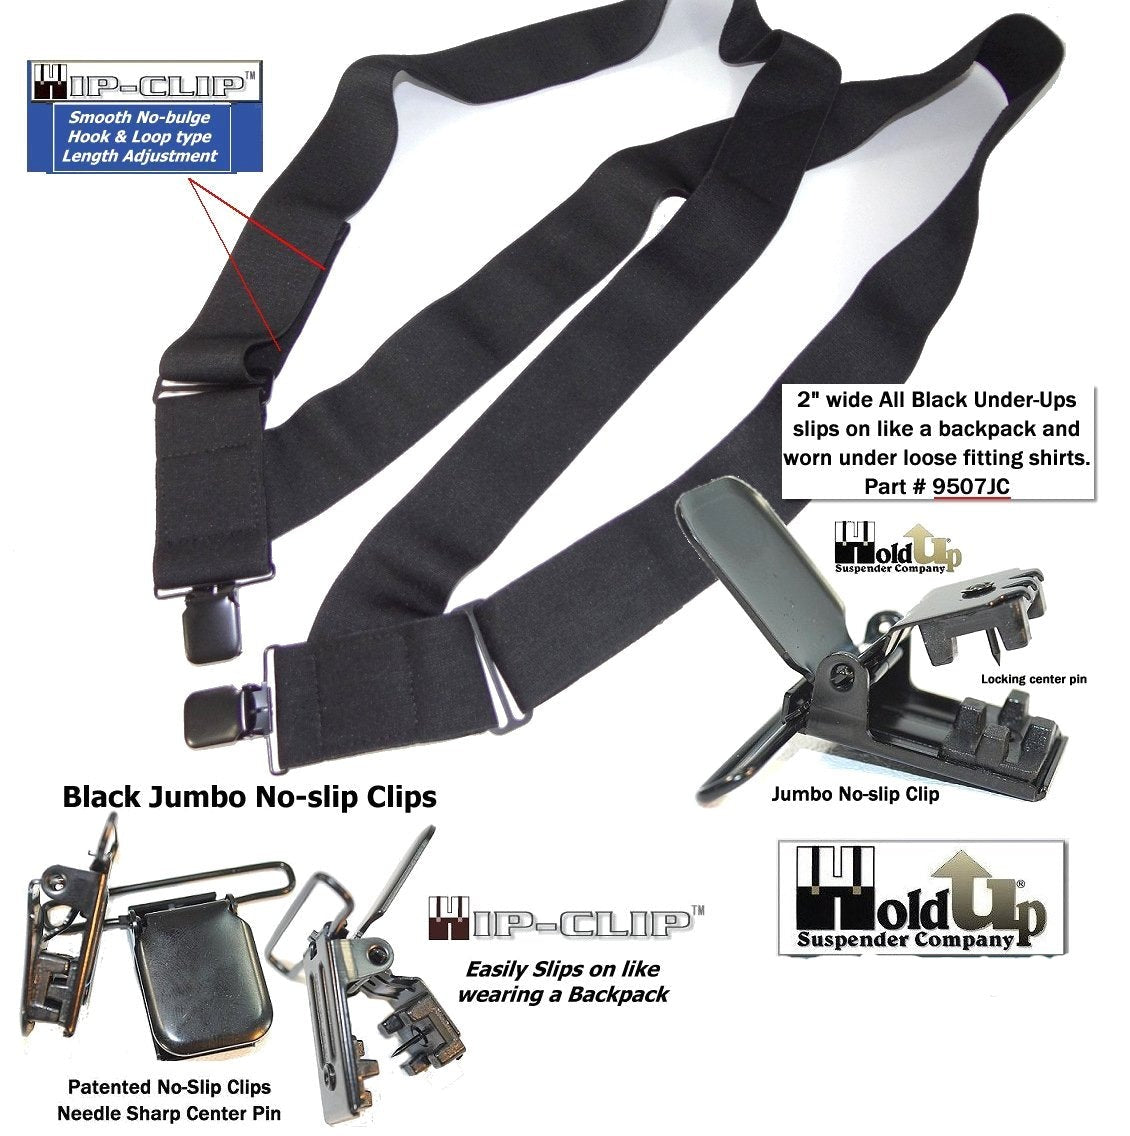 HoldUp Brand No-Slip Clip Black 2" Wide Under-Ups suspenders